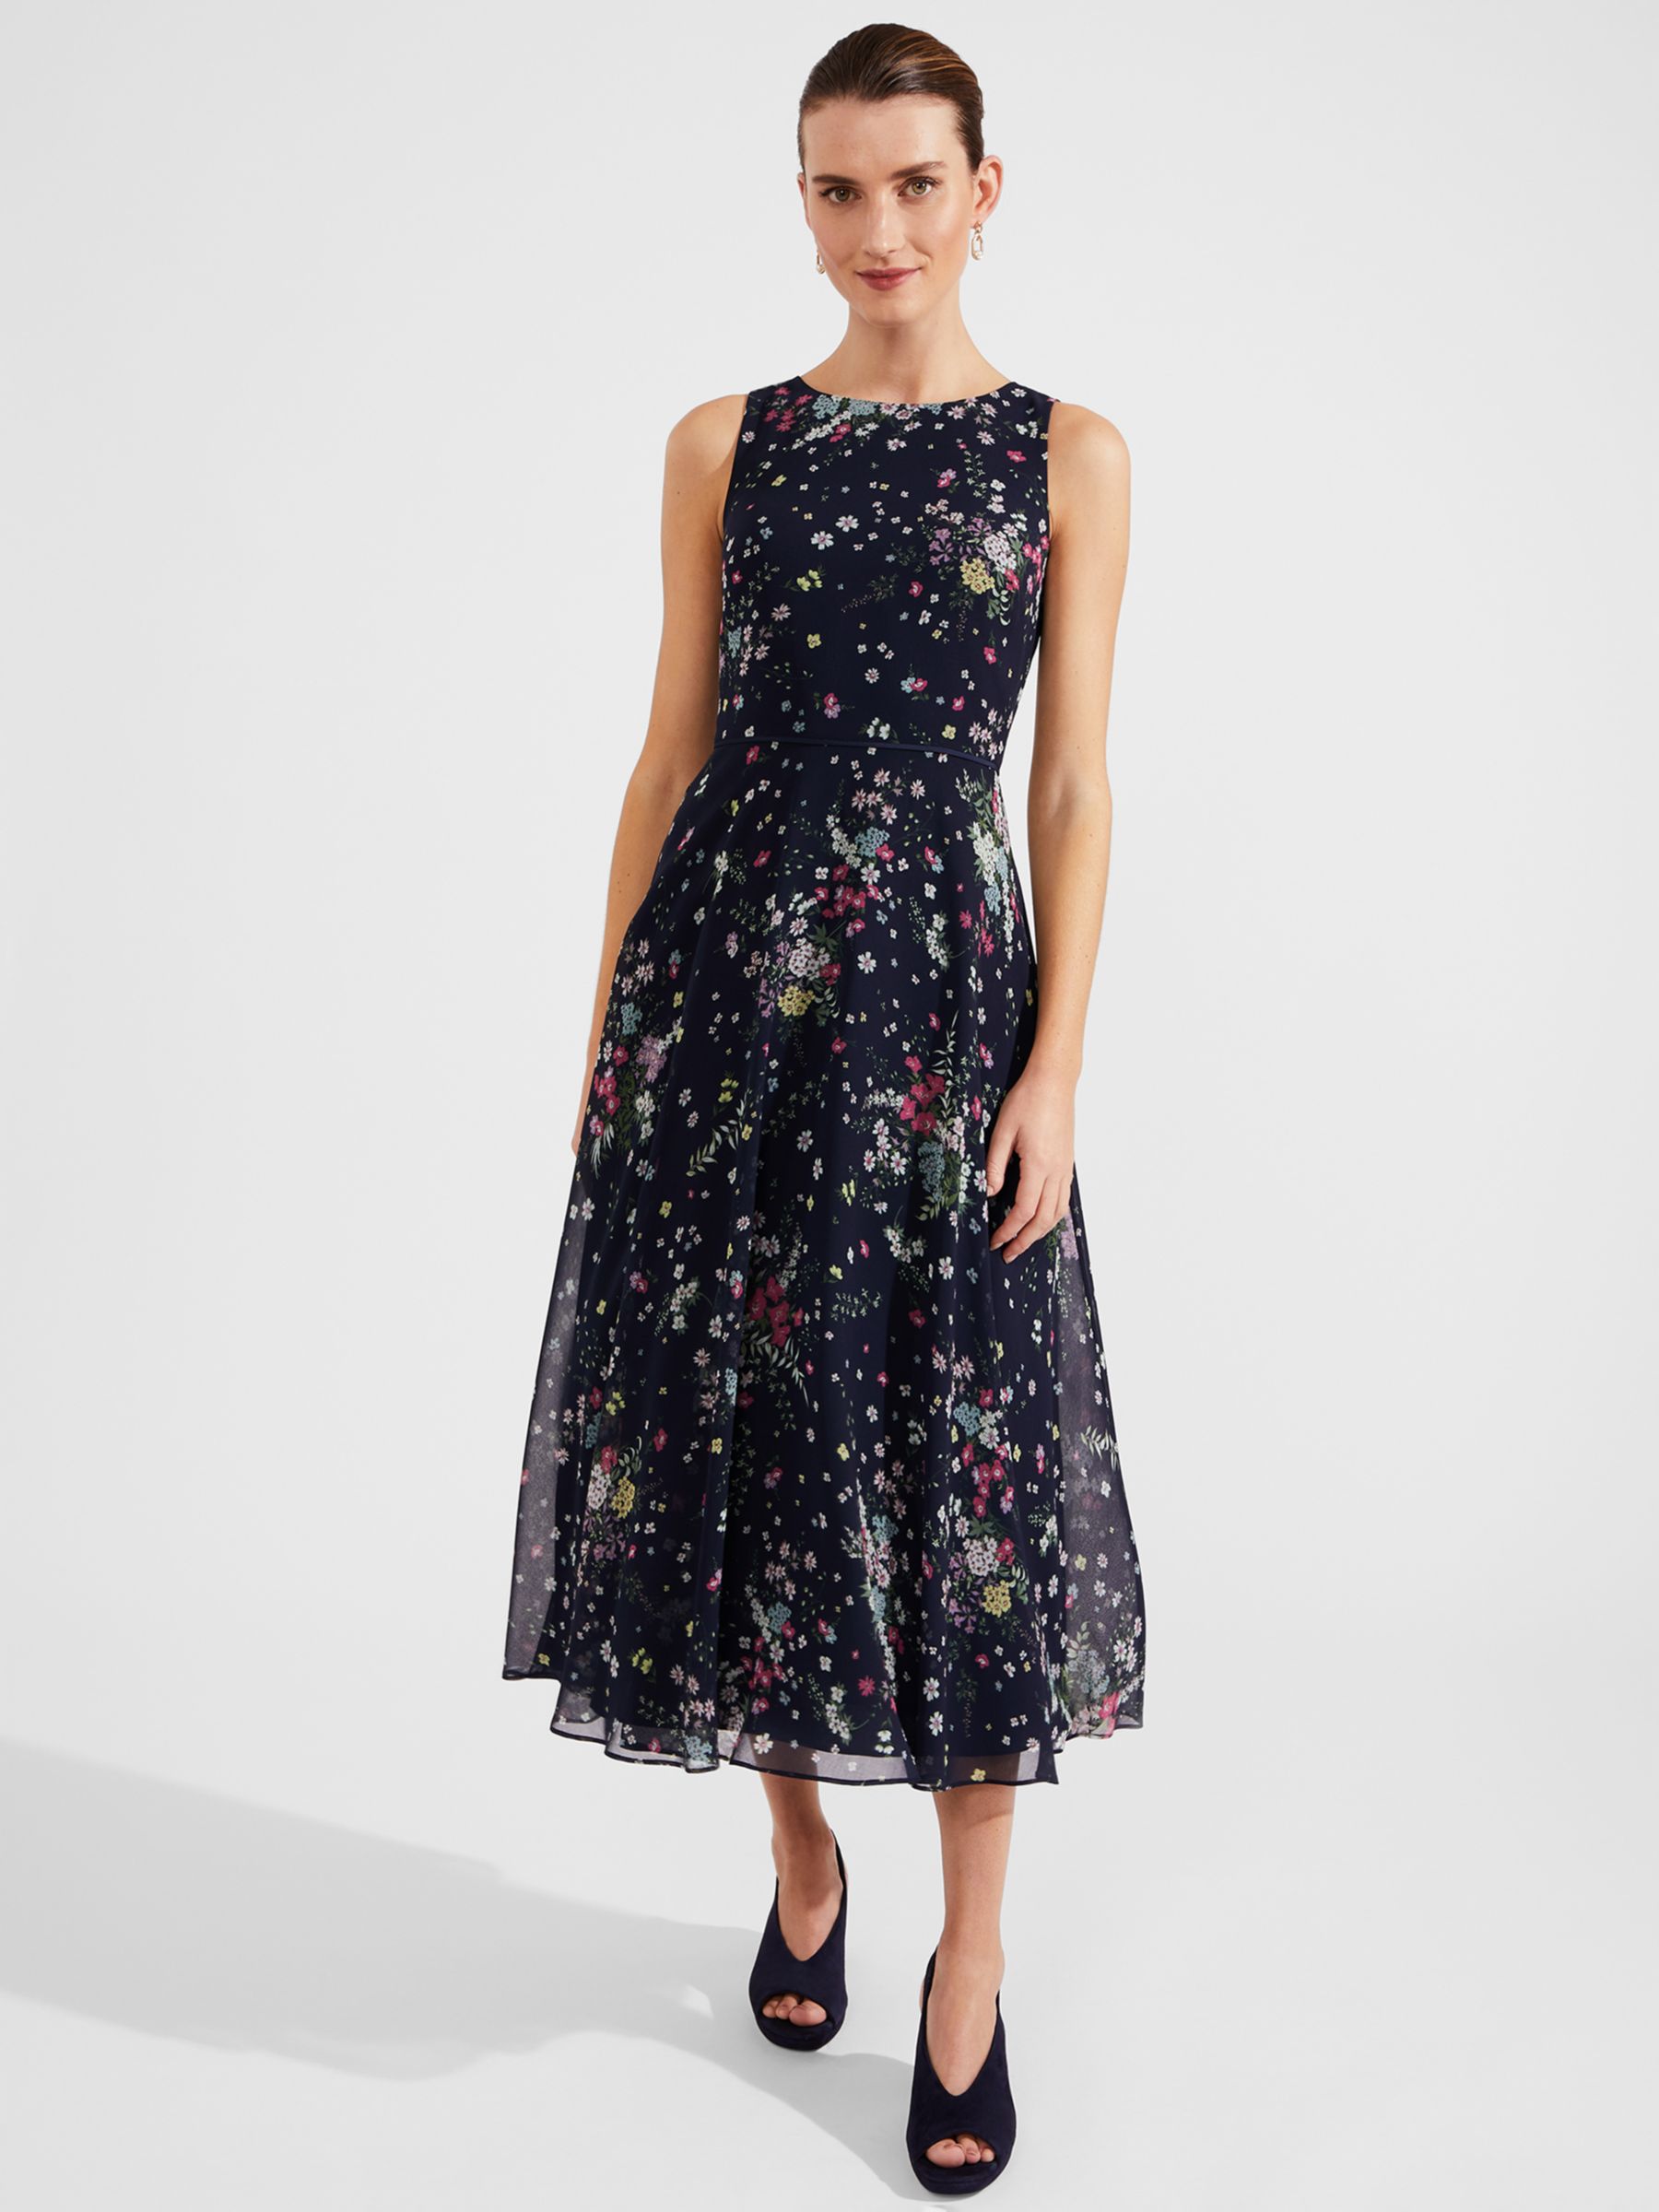 Hobbs Carly Floral Midi Dress, Navy/Multi, 10